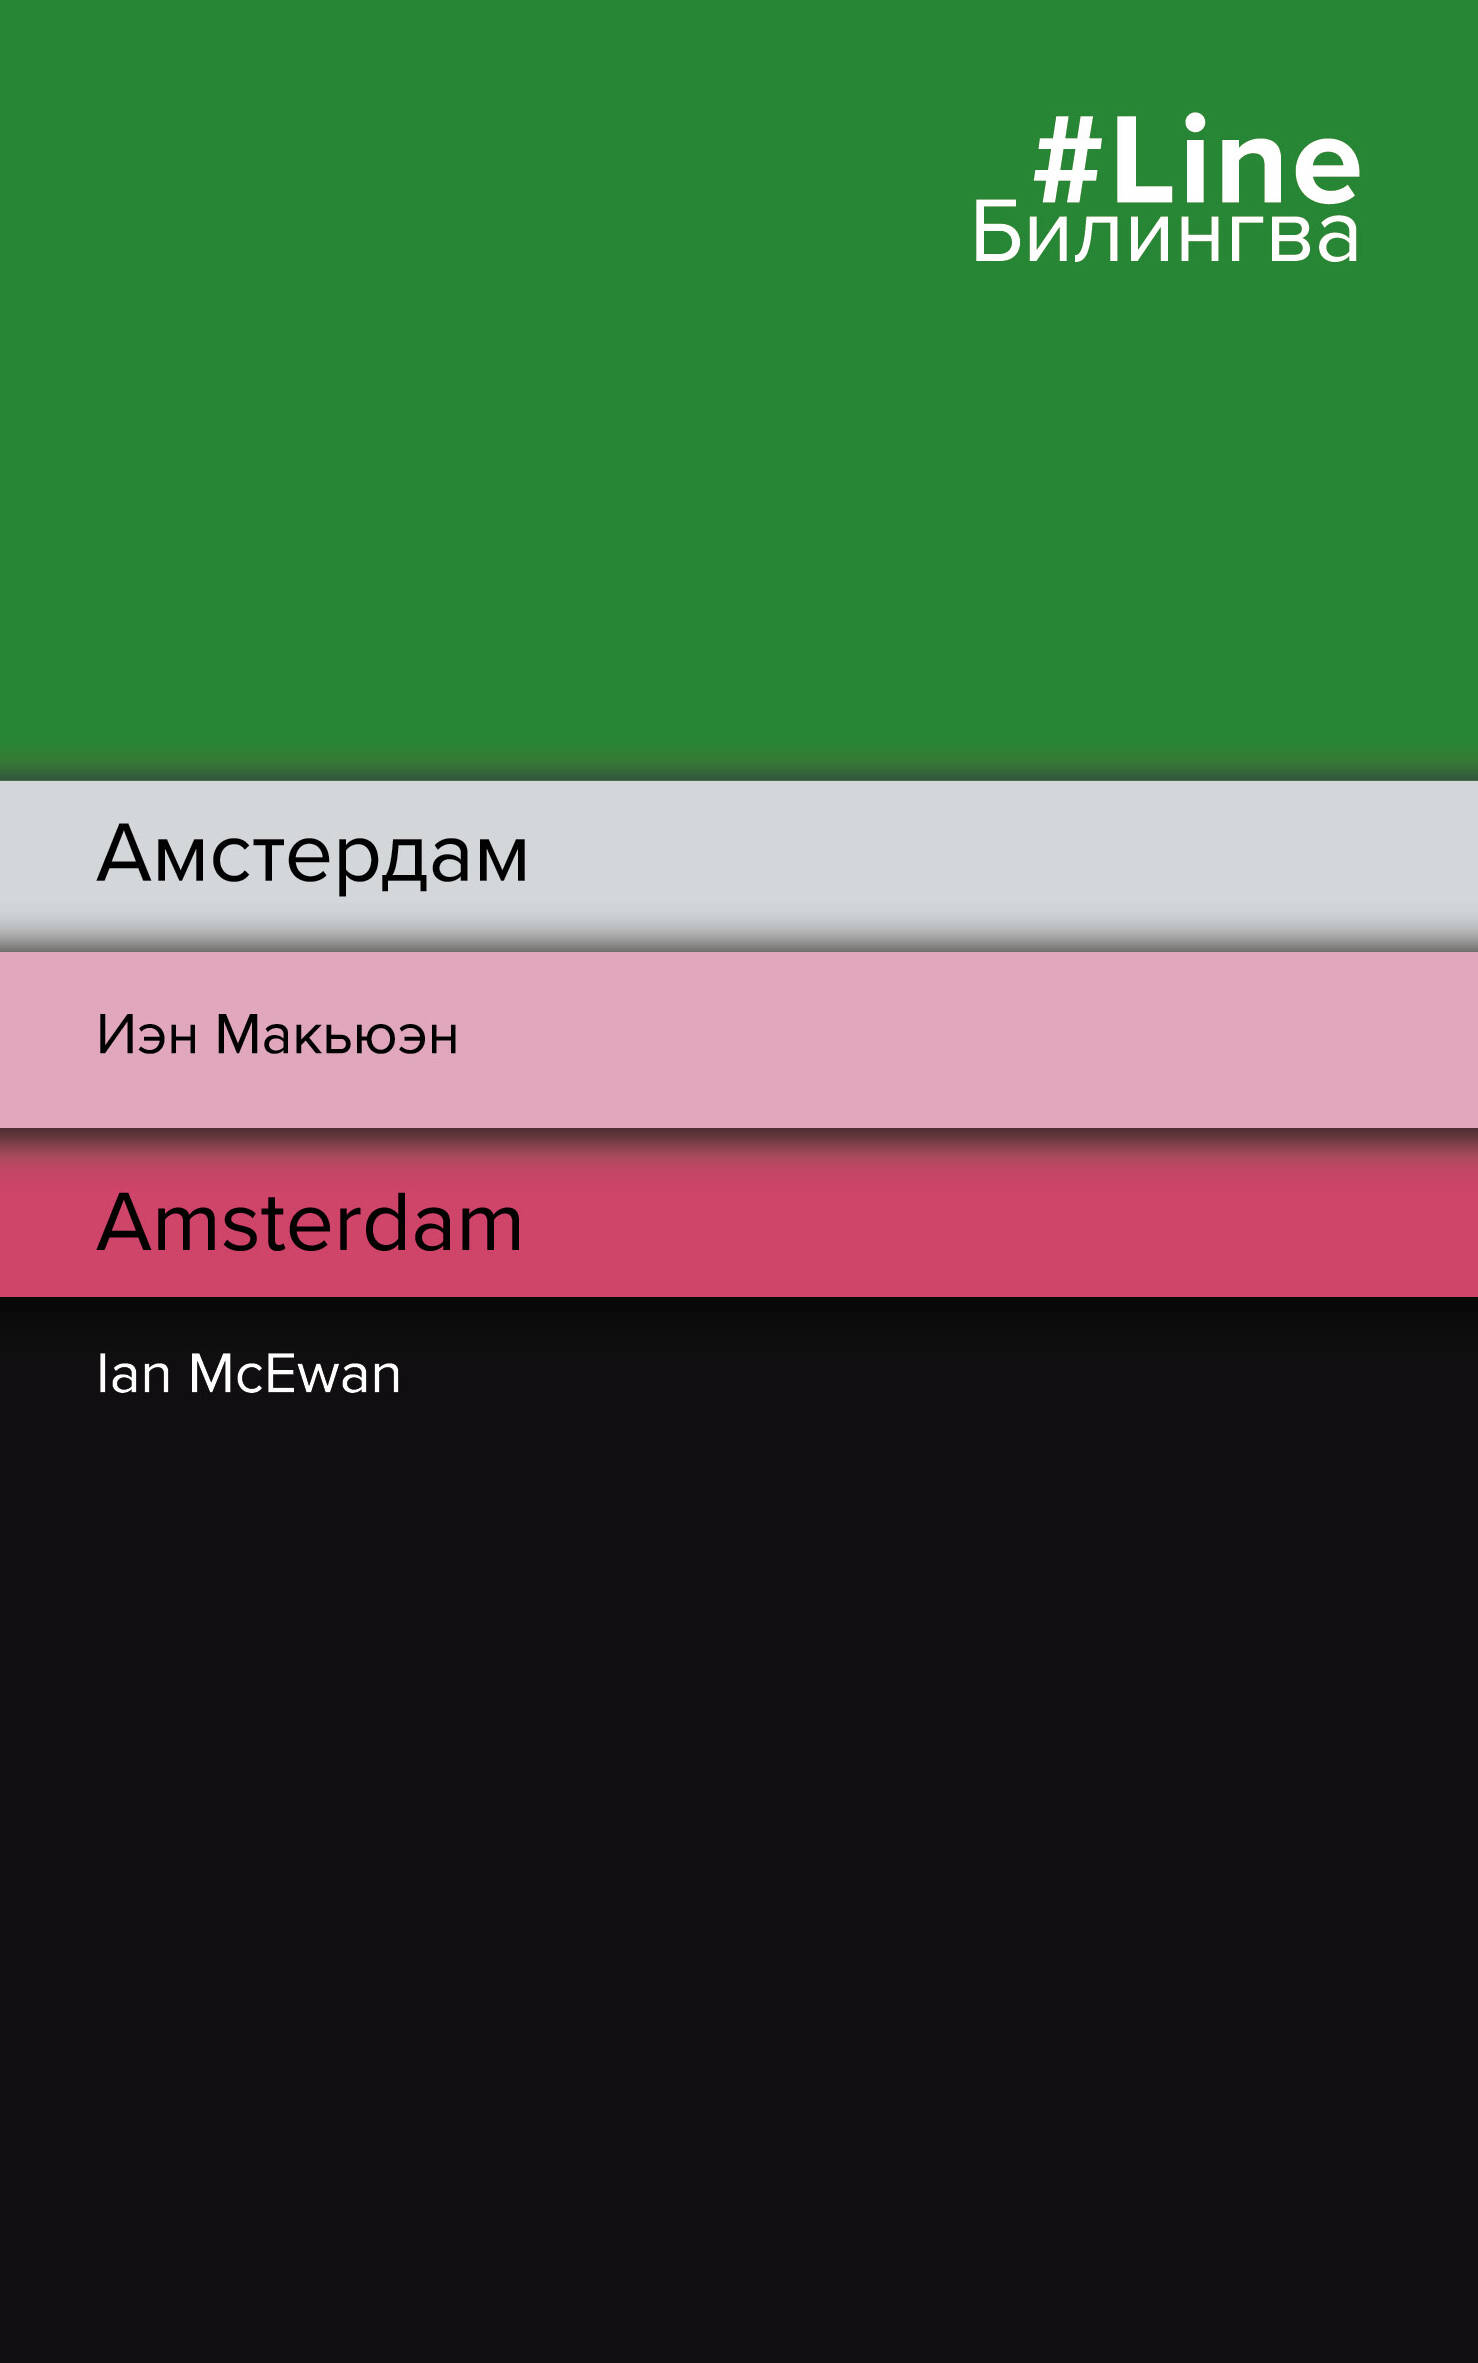 Макьюэн Иэн Расселл Амстердам / Amsterdam лессинг дорис макьюэн иэн расселл амстердам и марта квест от нобелевского лауреата и лауреата премии букер комплект из 2 книг